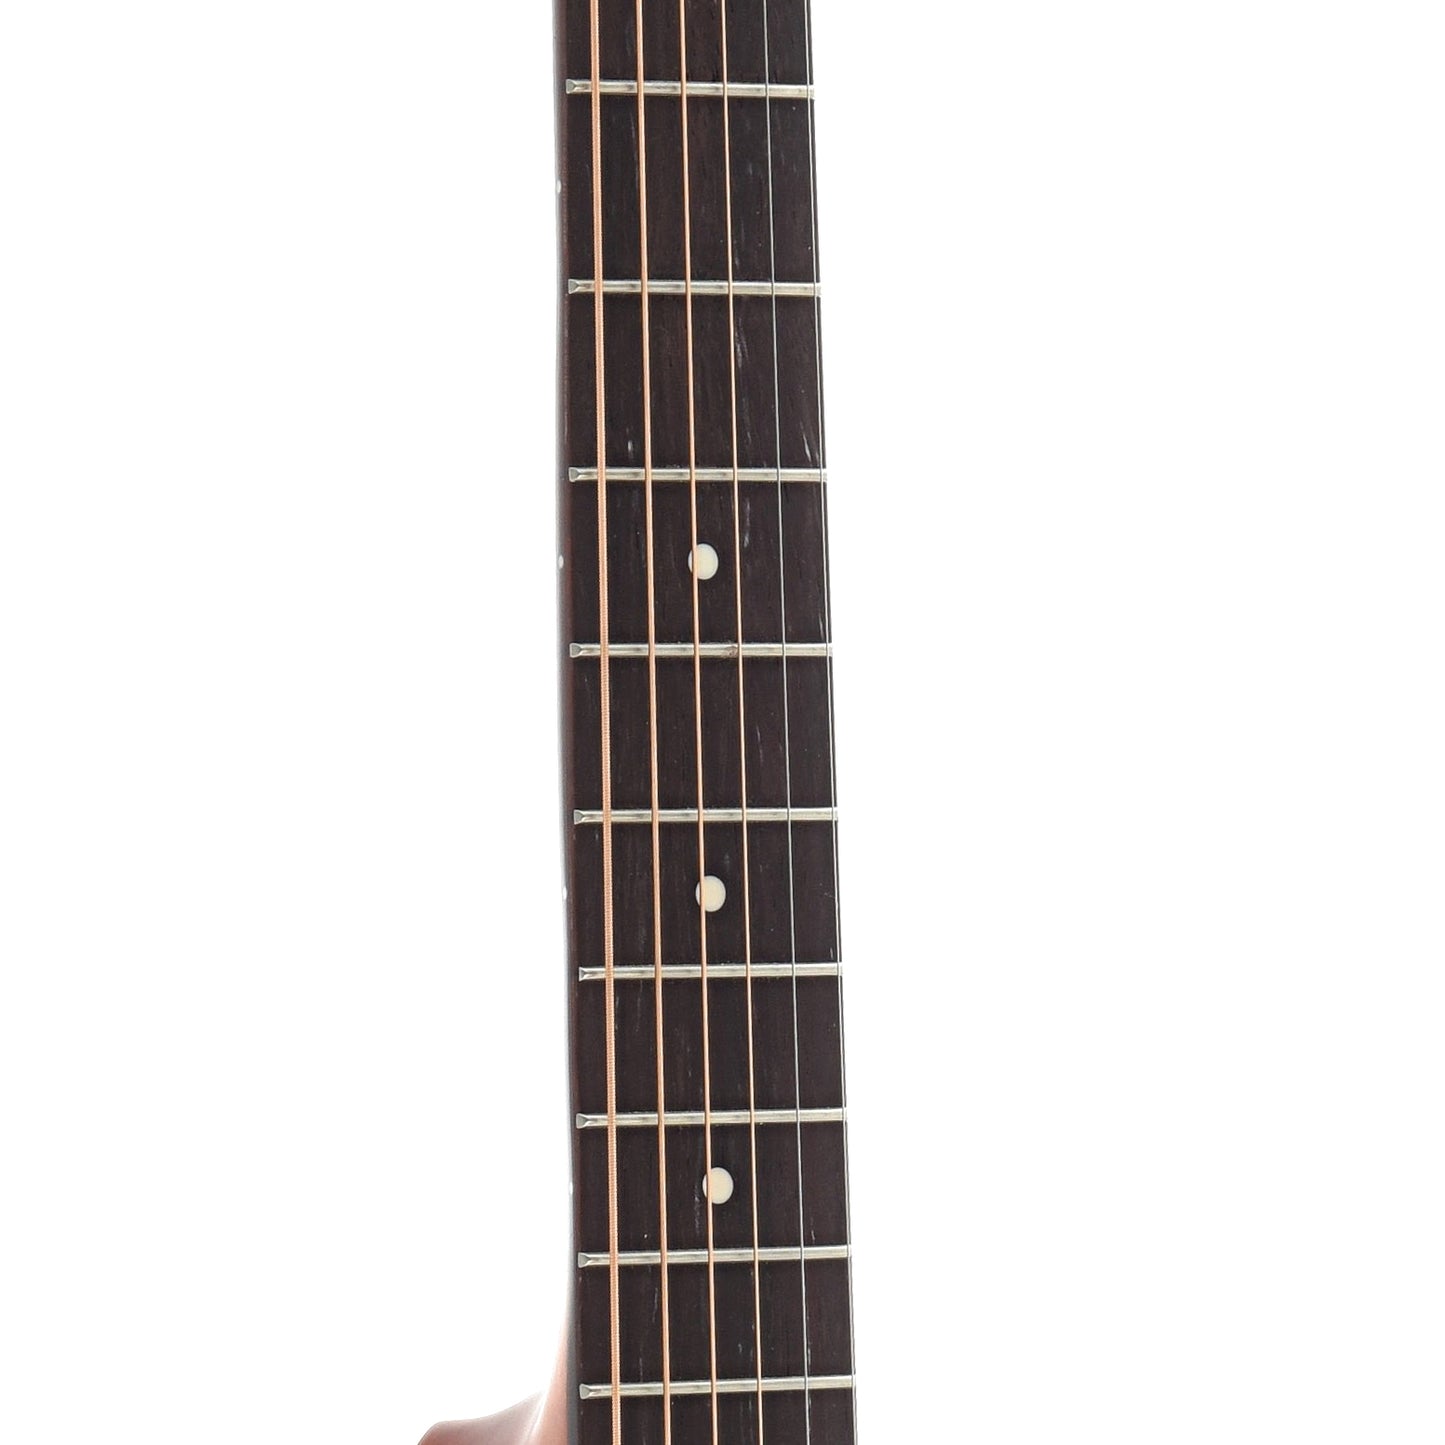 Fretboard of Gretsch Ampli-Sonic G9200 Boxcar Standard Roundneck Resonator Guitar